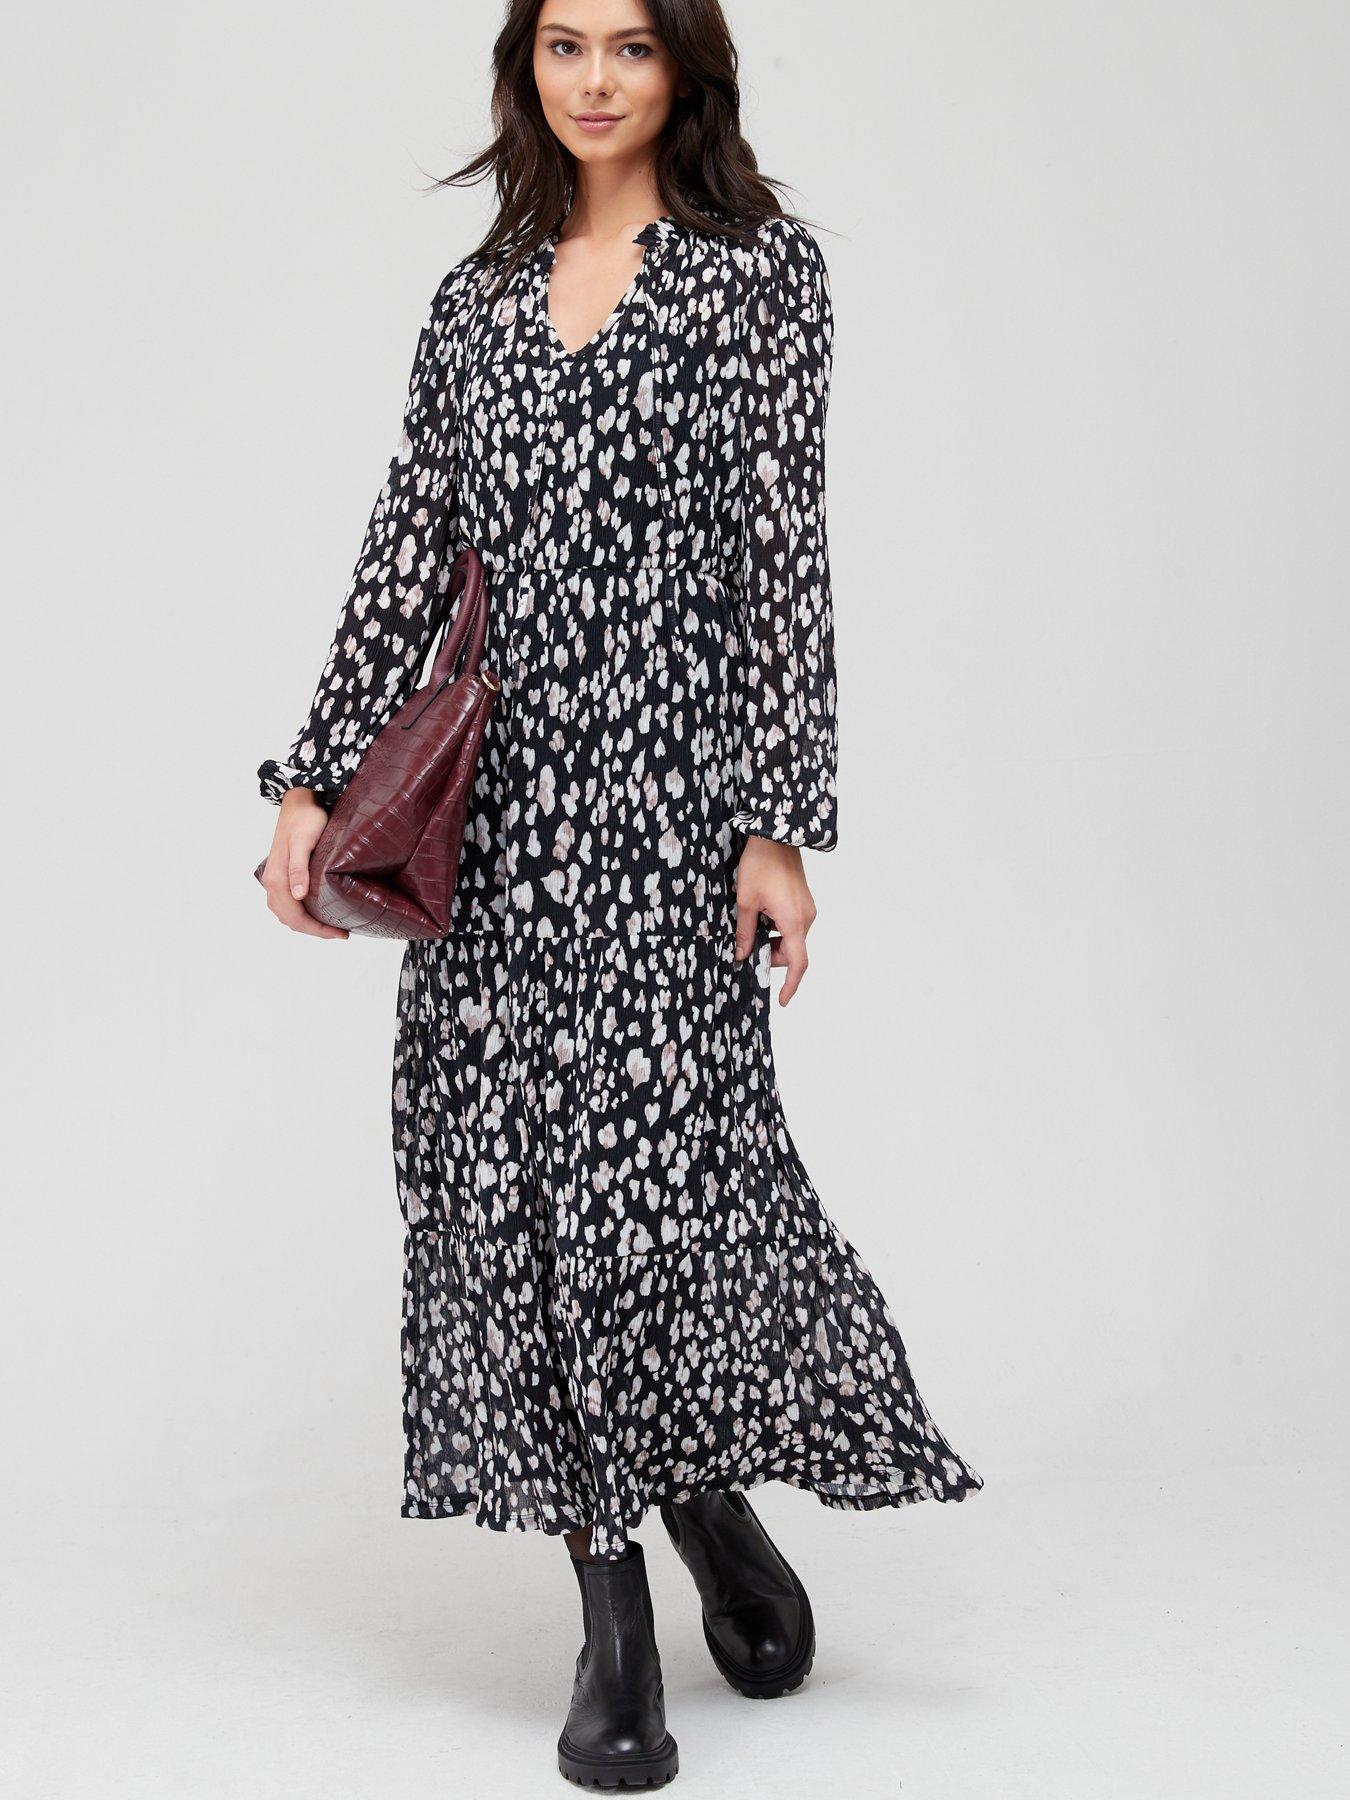 Women/'s Blouson Printed A-Line Dress Details about  / Style /& Co